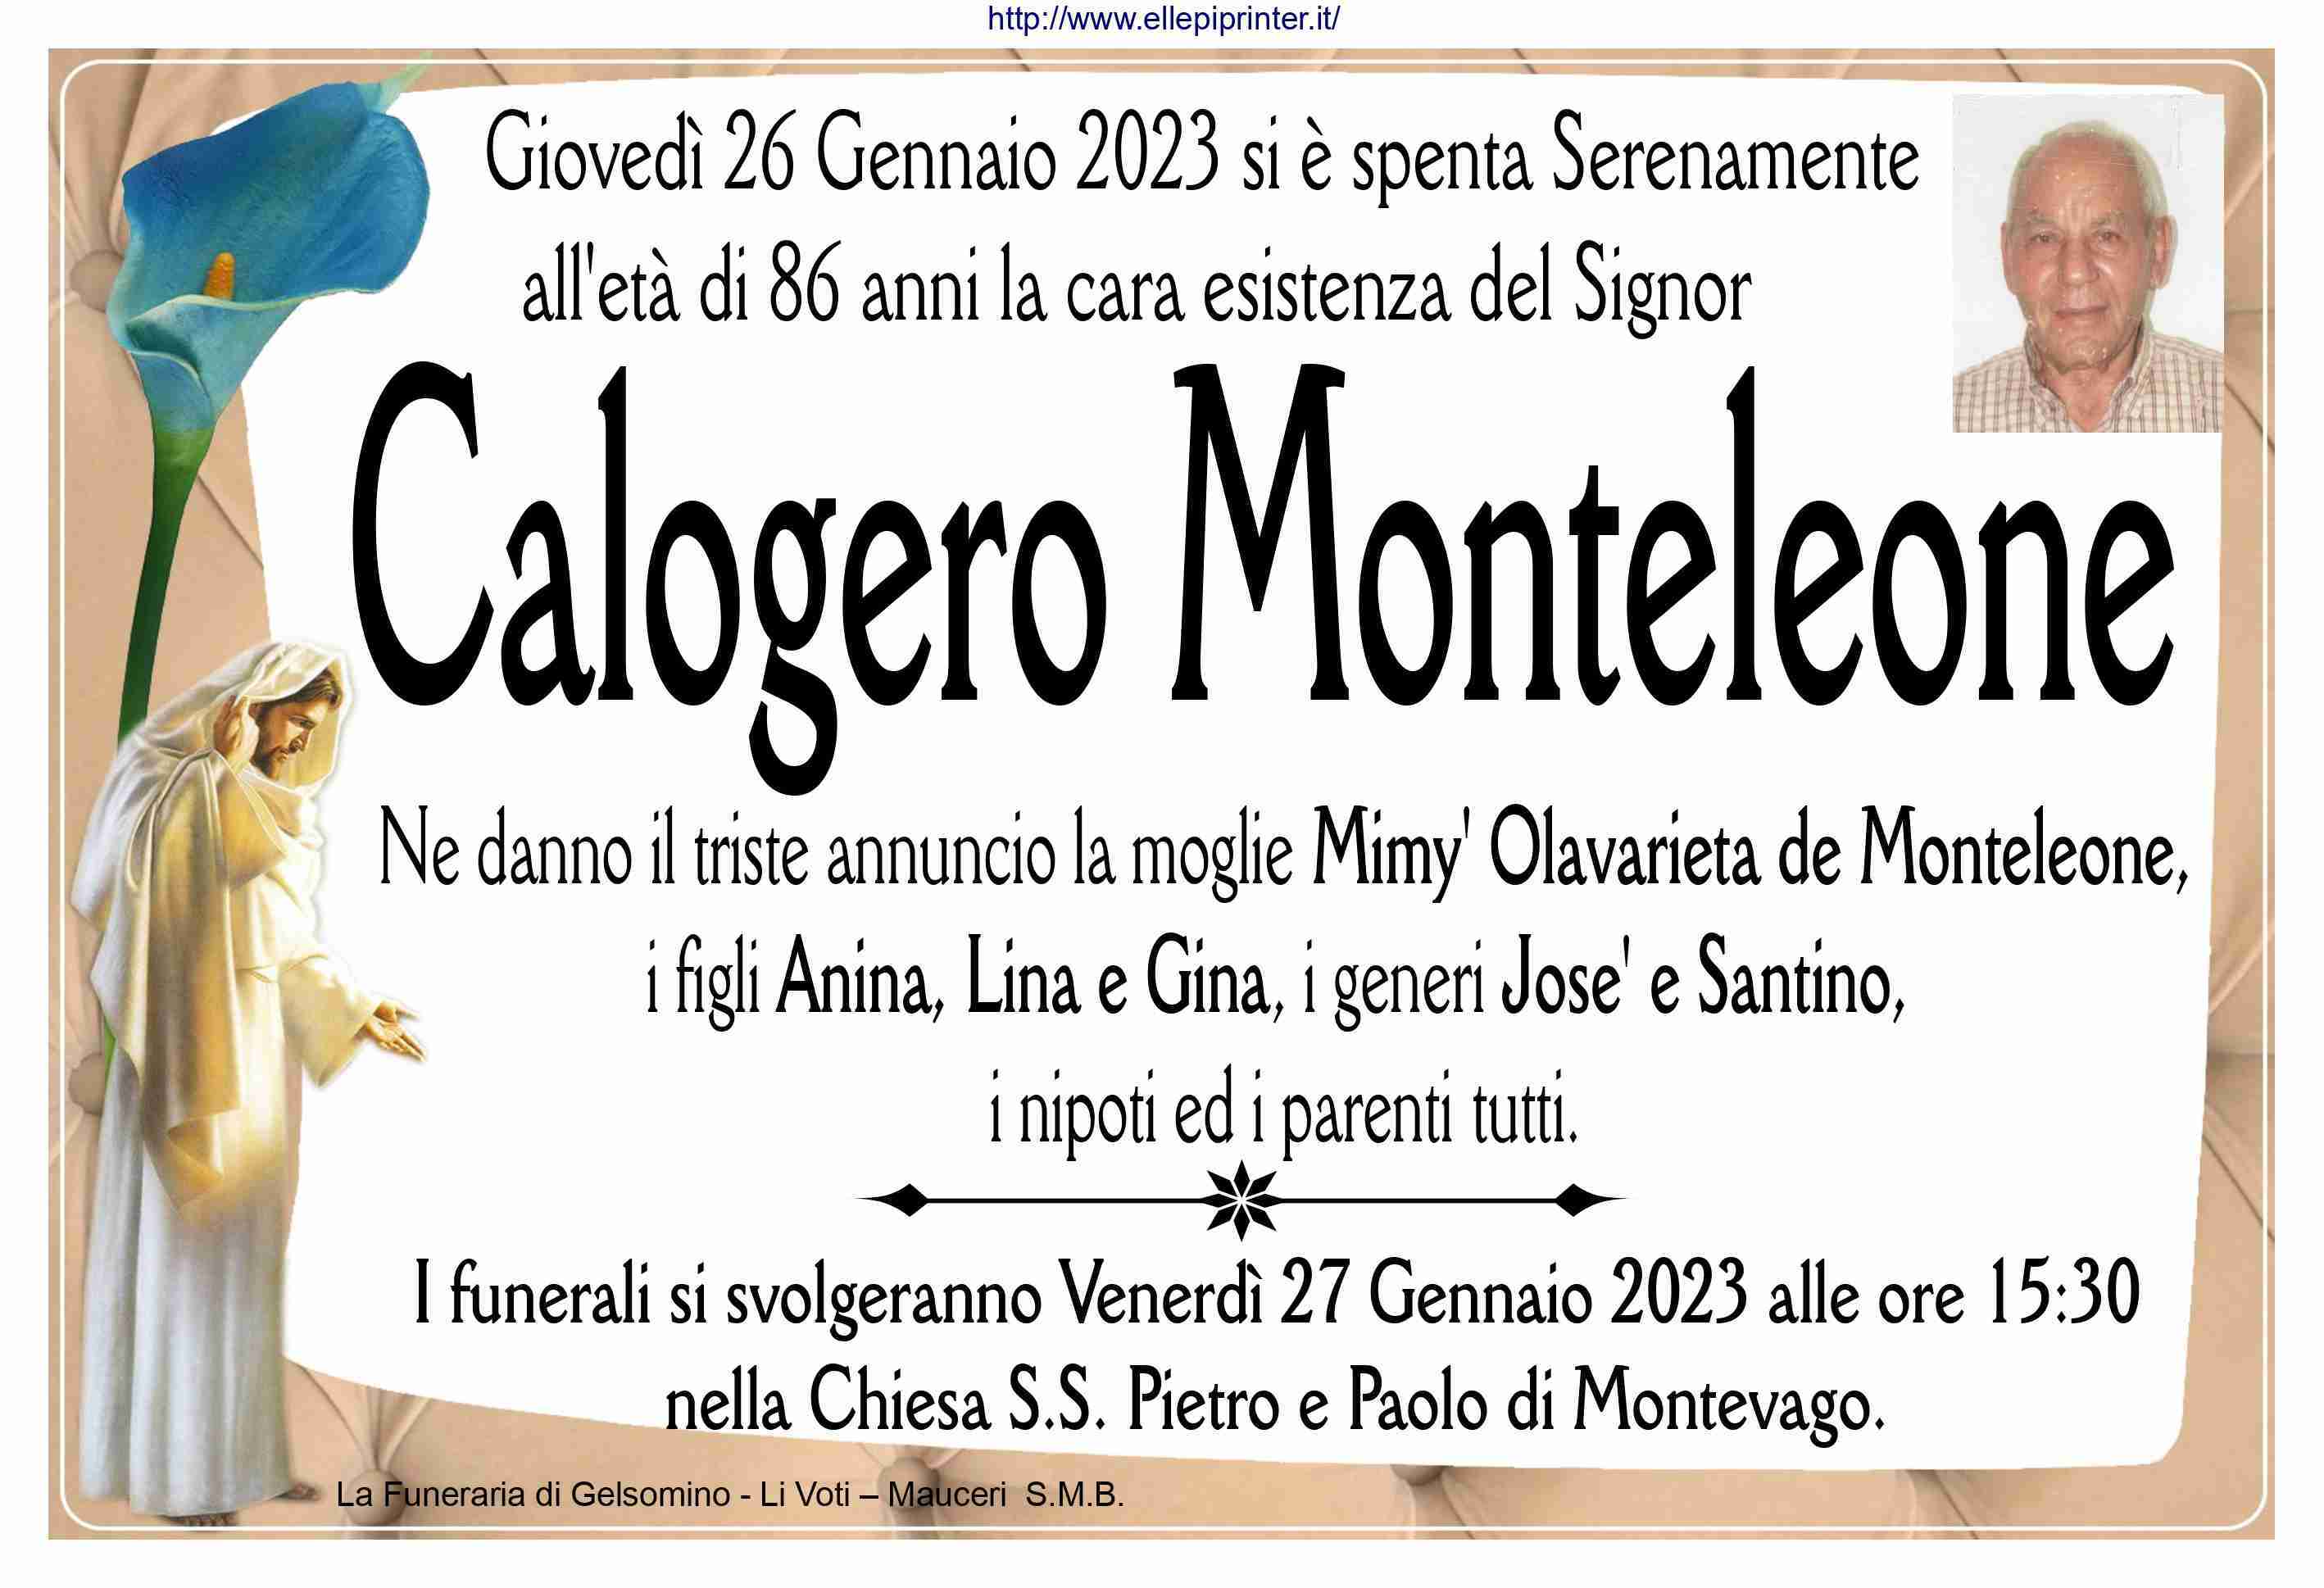 Calogero Monteleone